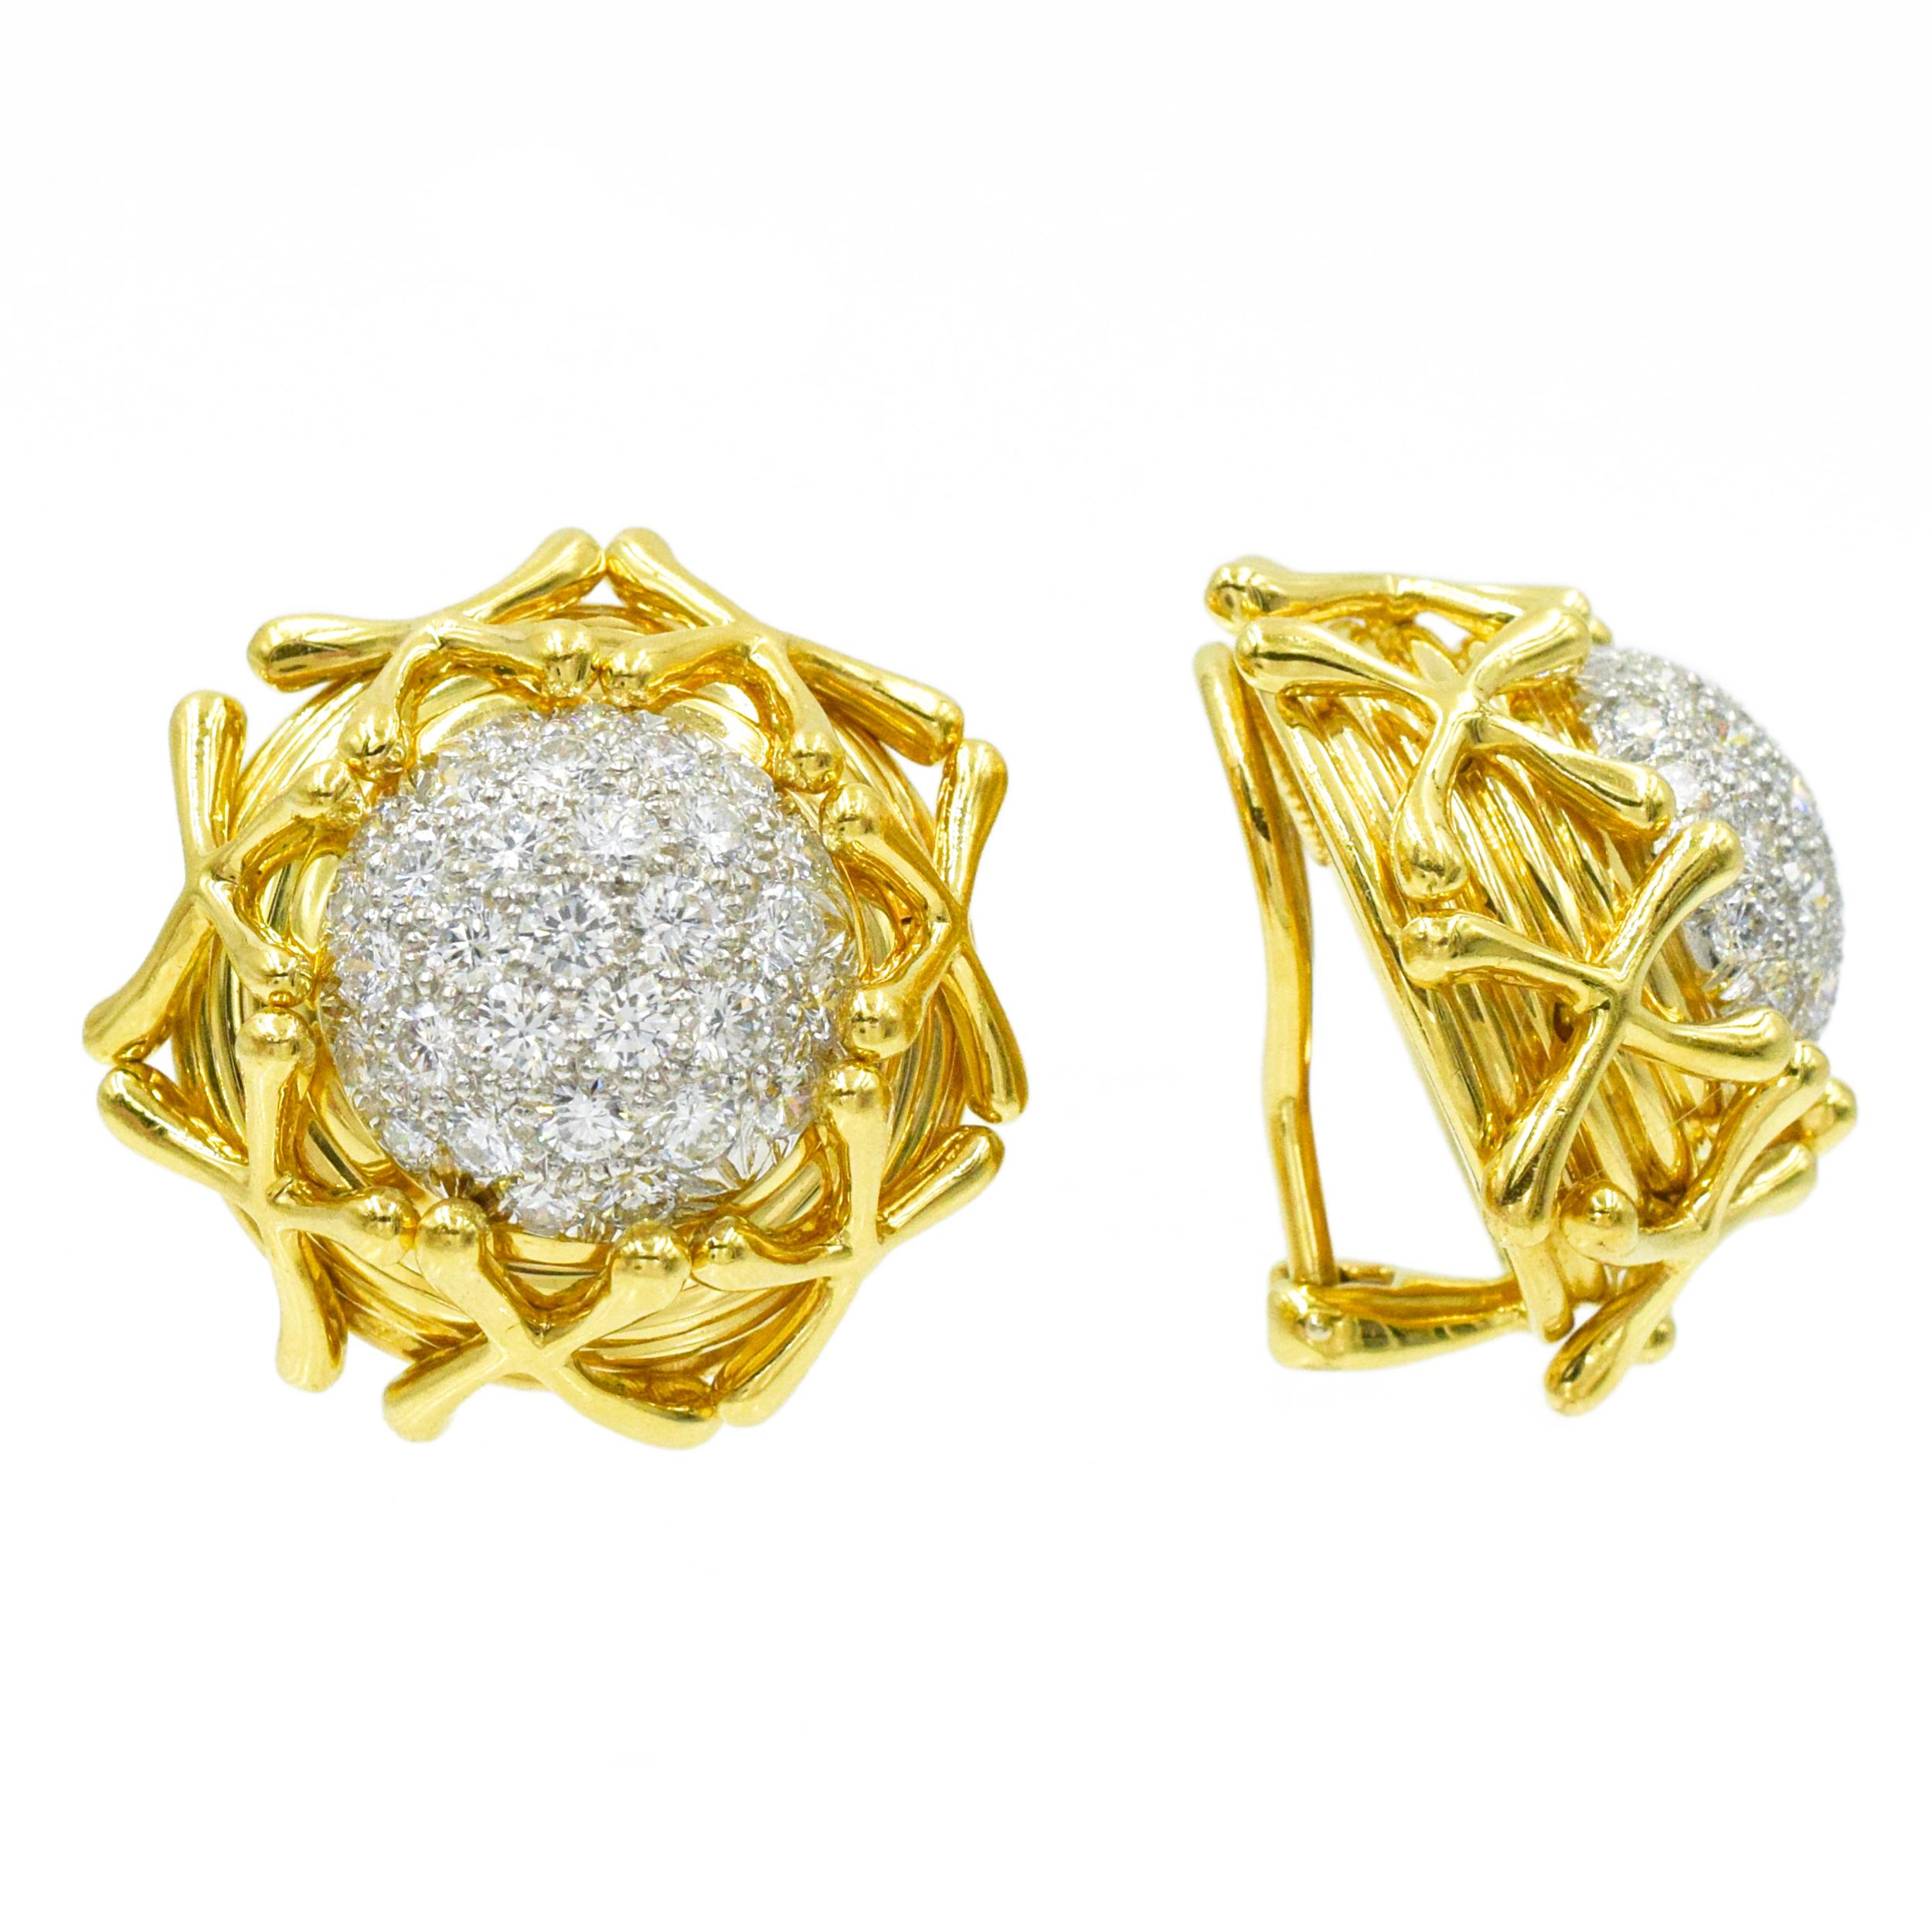 Round Cut Tiffany & Co. Jean Shlumberger Diamond Clip on Earrings in 18k Yellow Gold